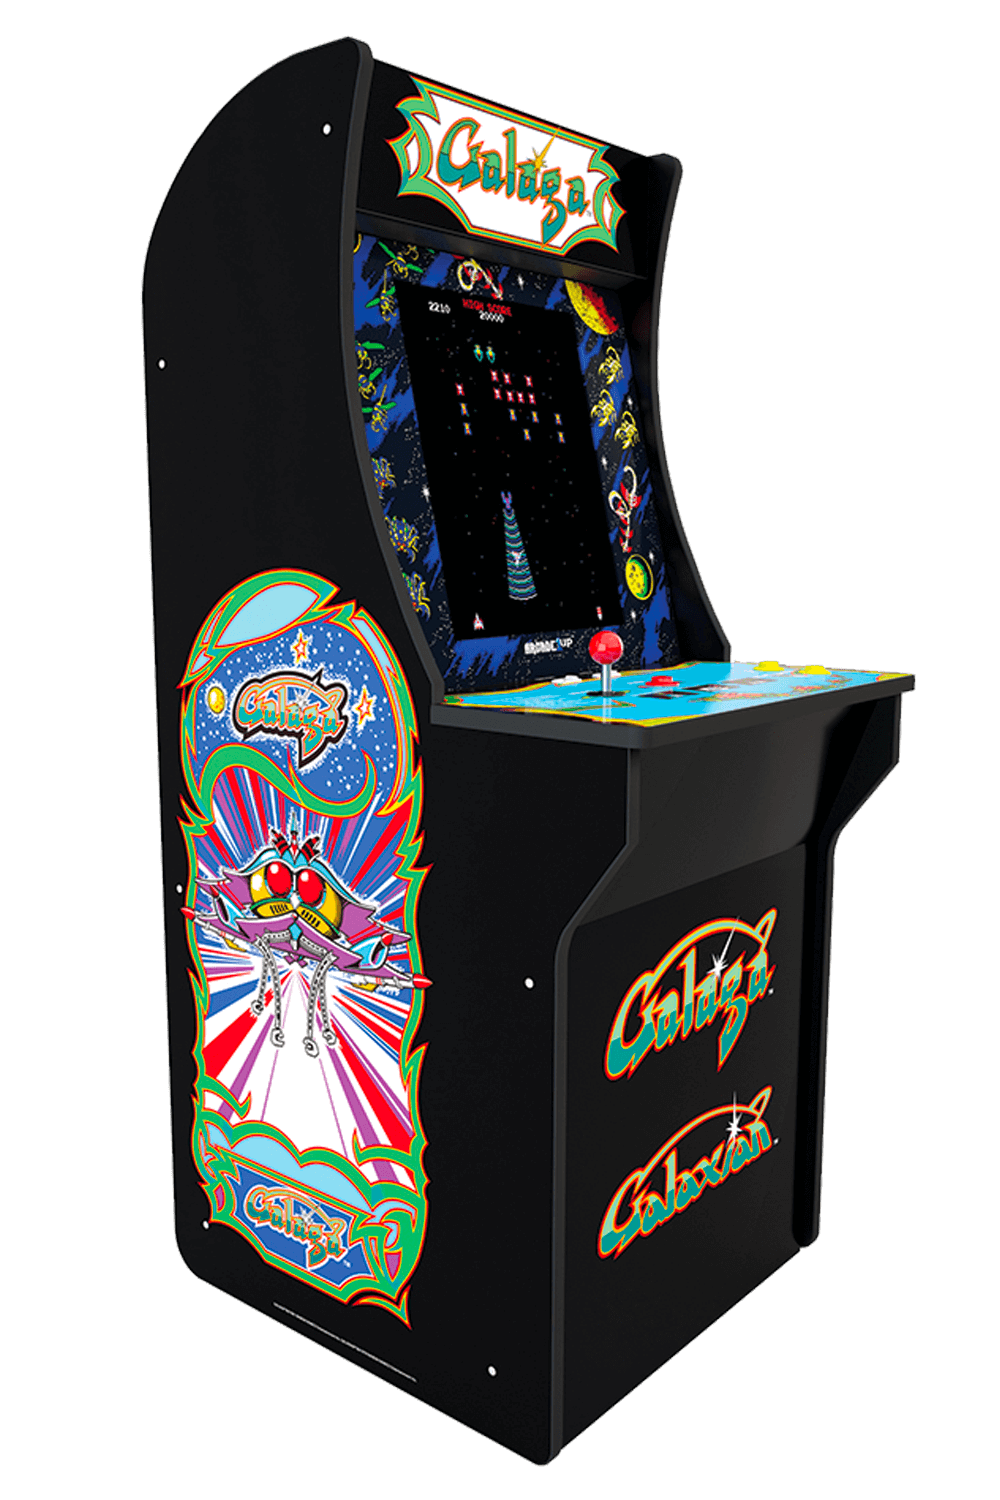 Galaga Arcade Cabinet Arcade1up